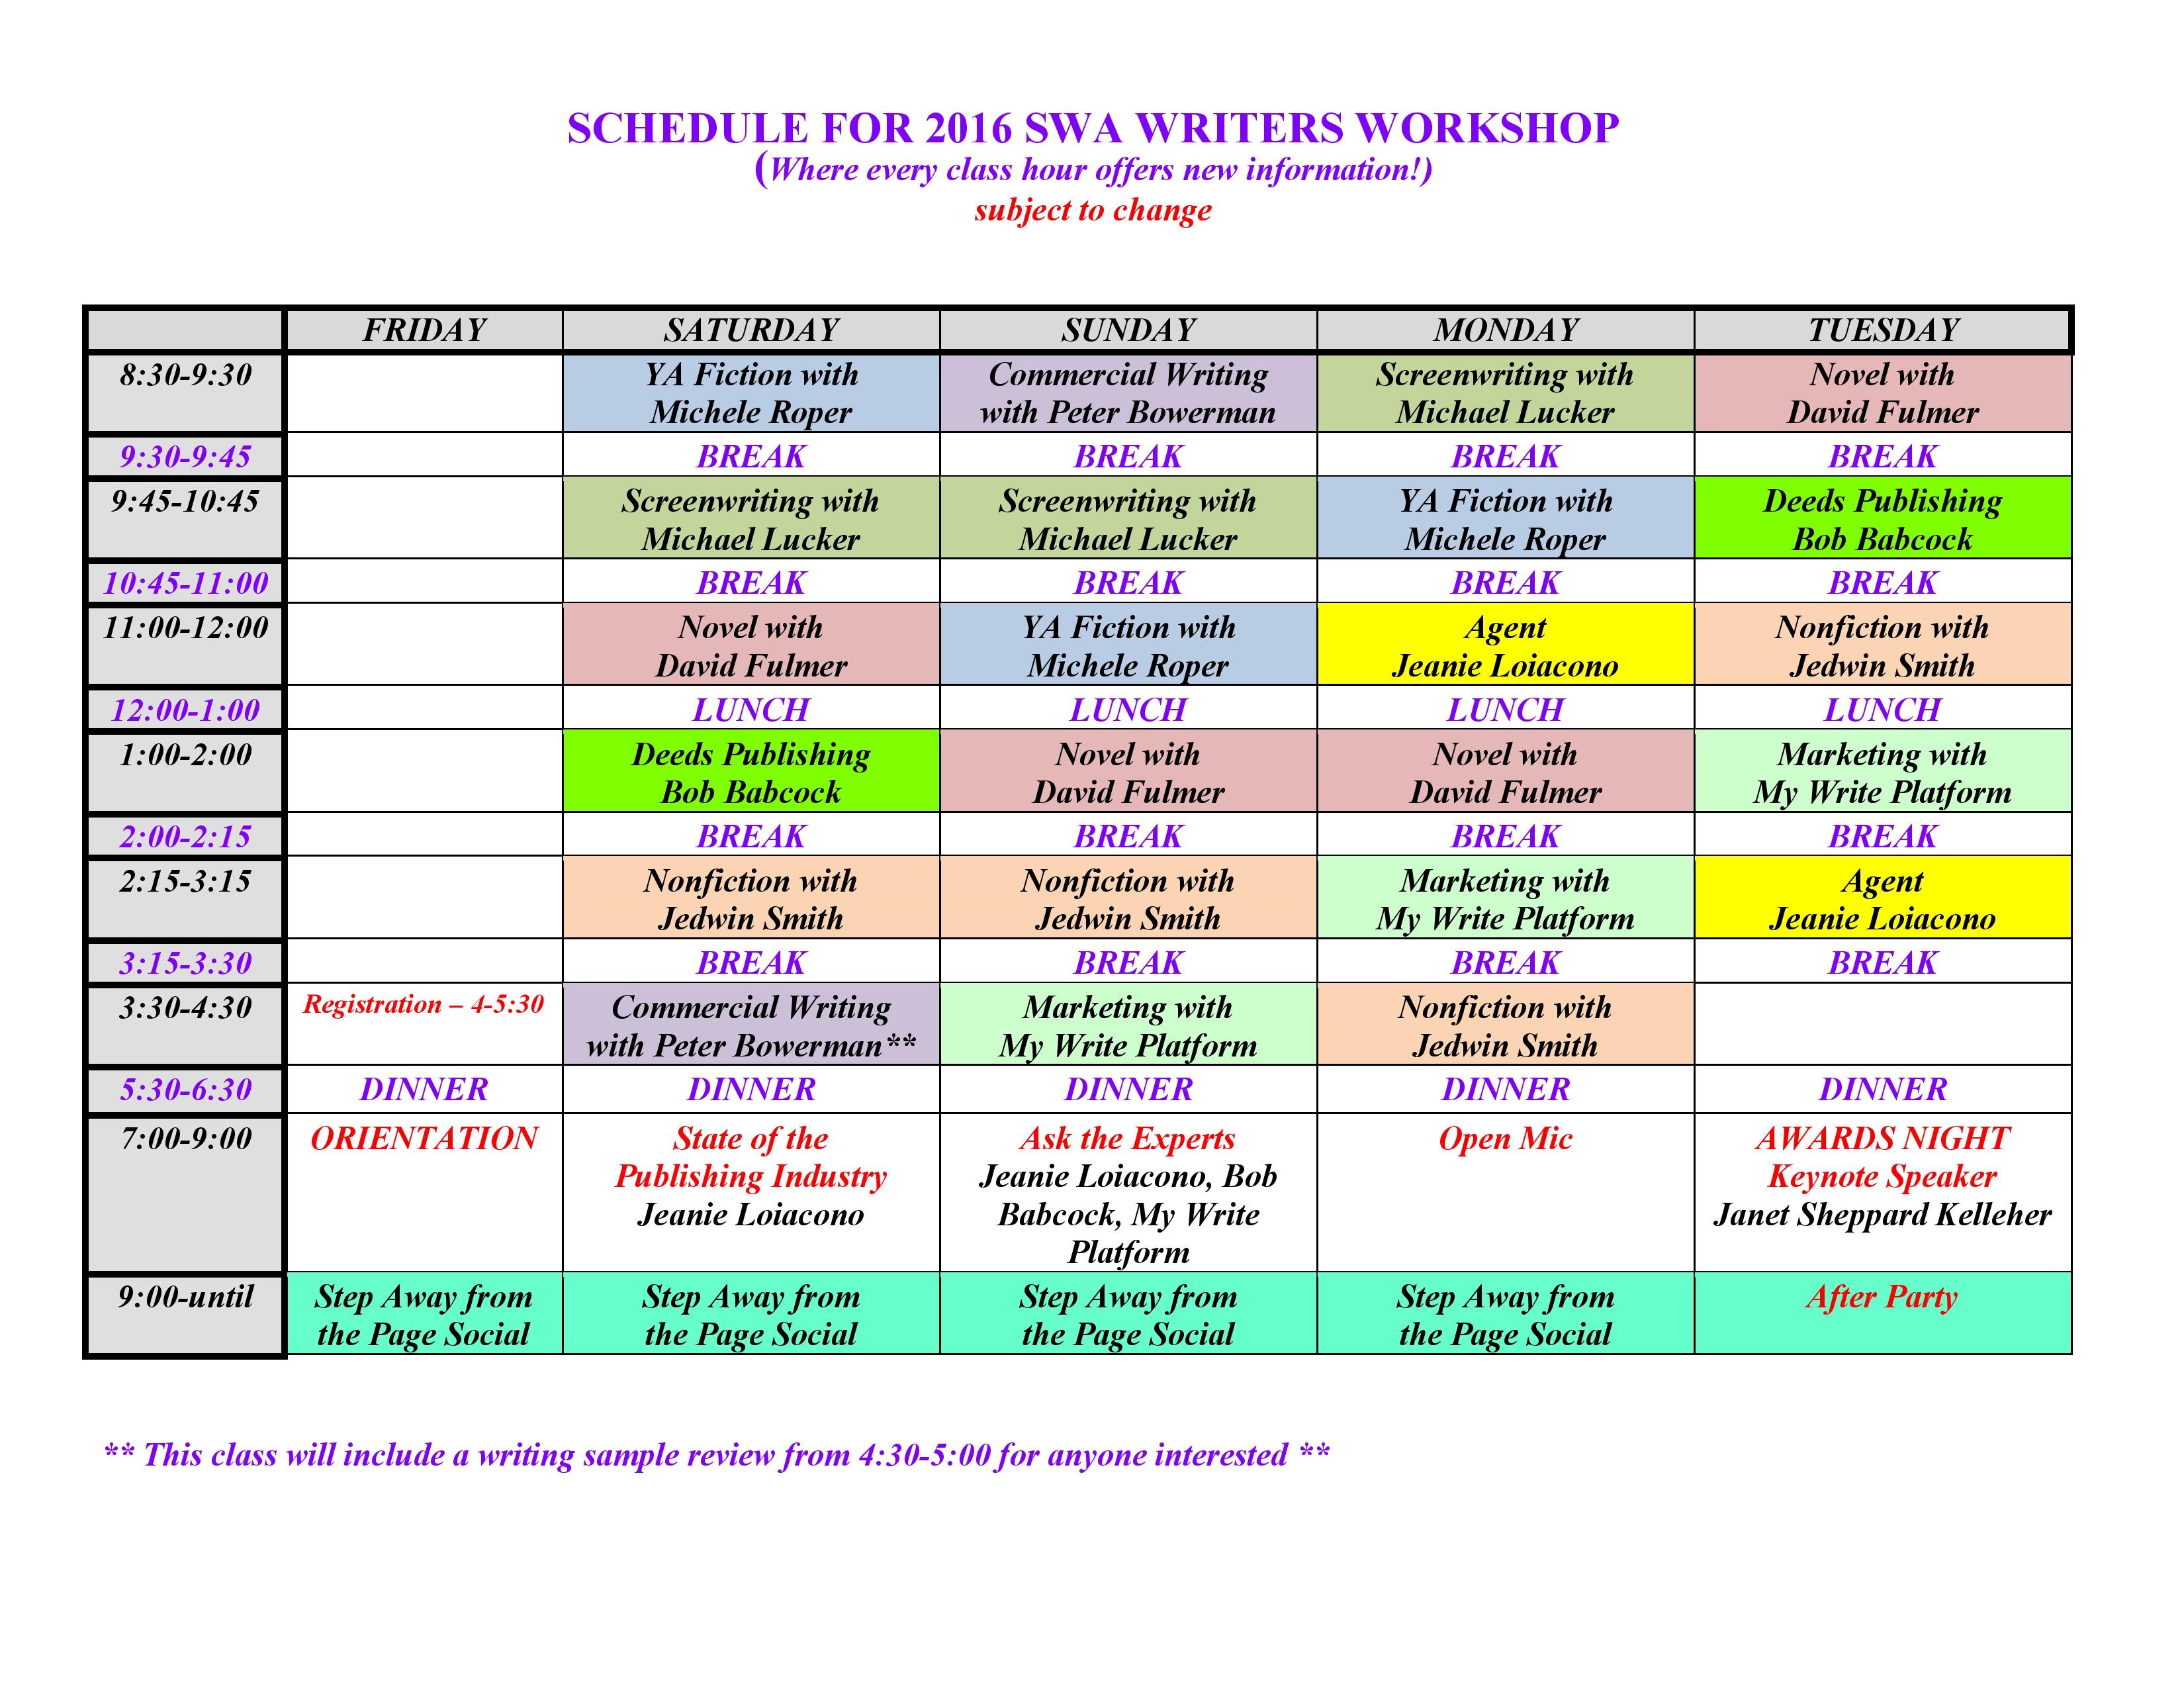 SWA 2016 schedule